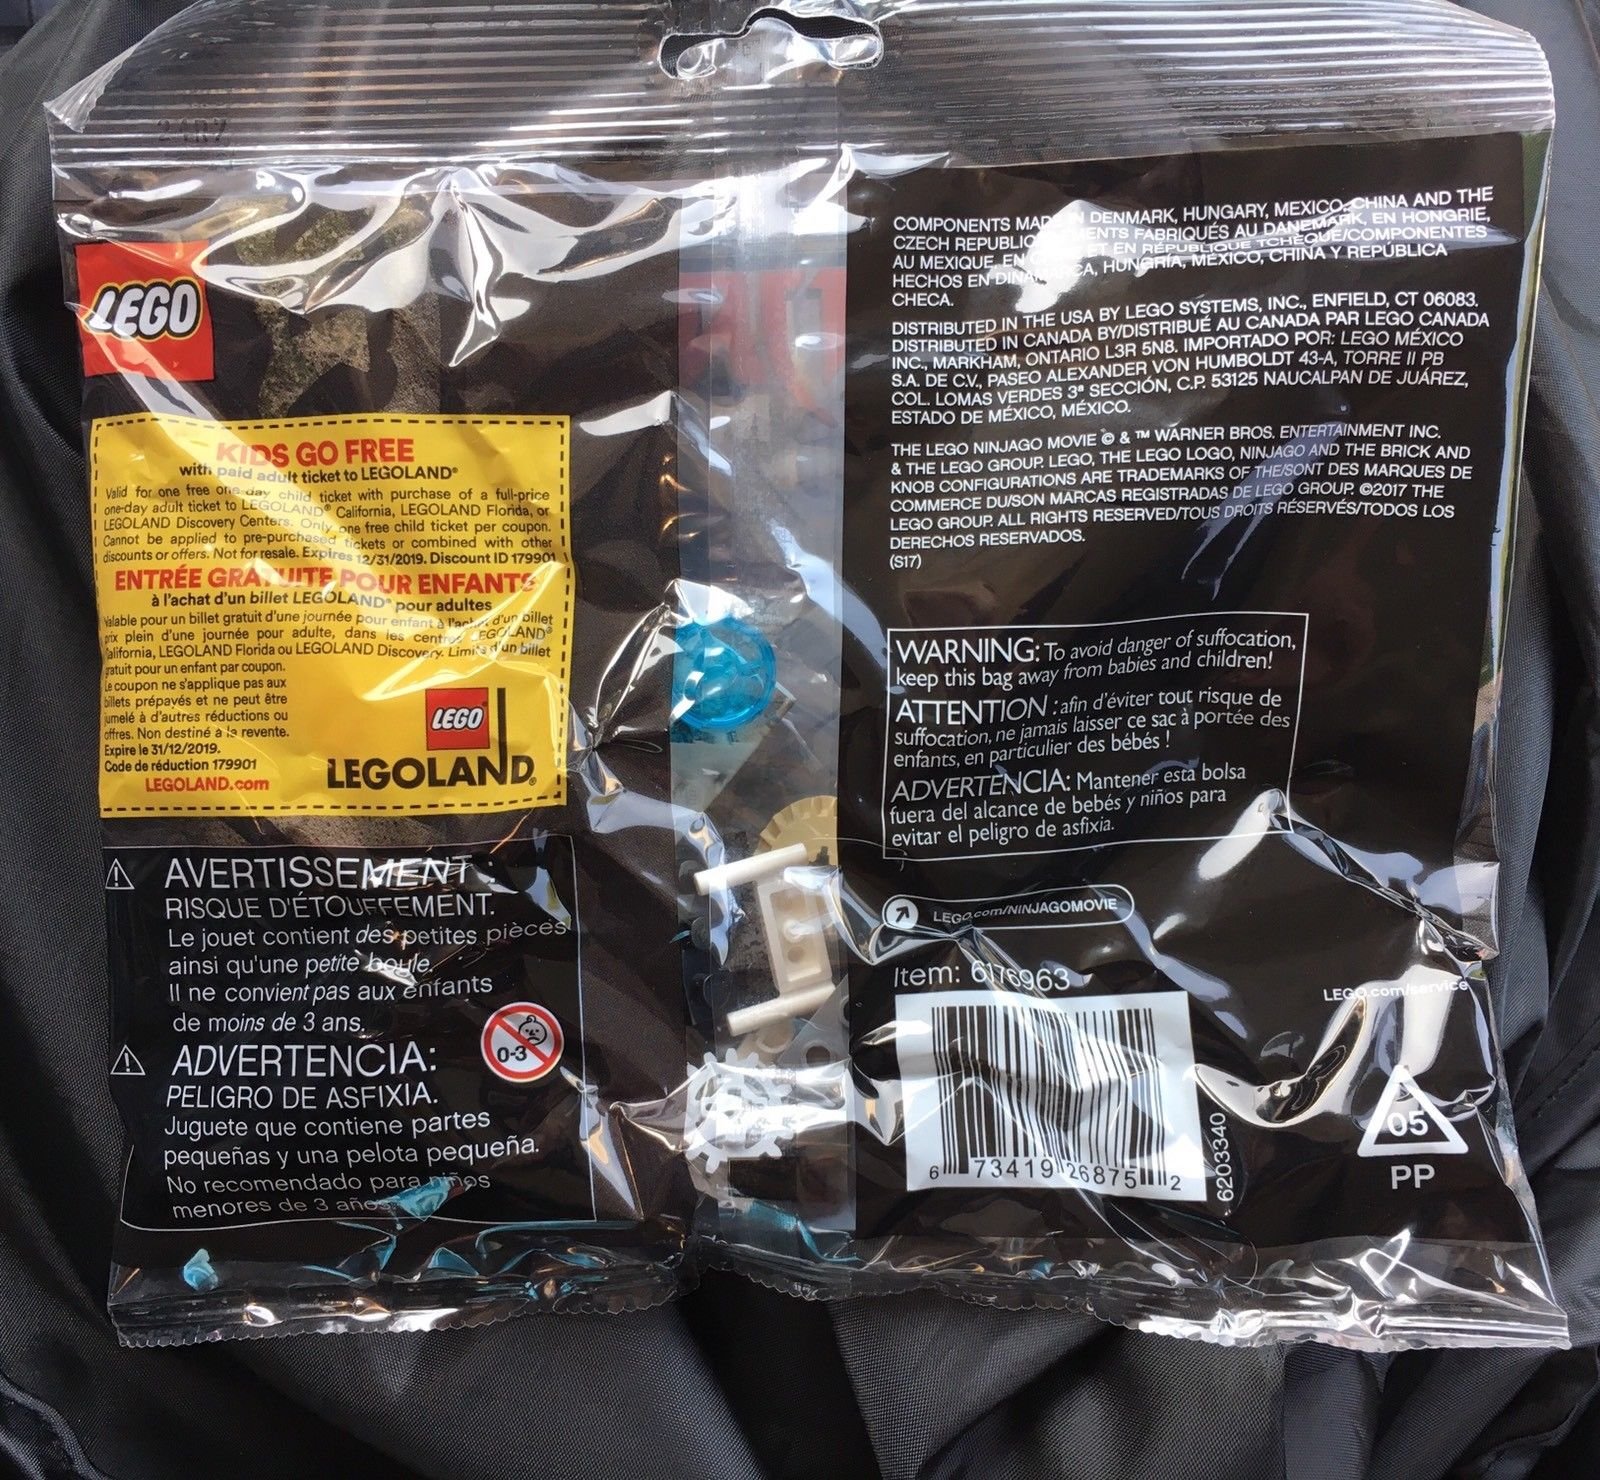 LEGO The Ninjago Movie Ice Tank Set (30427) Bagged